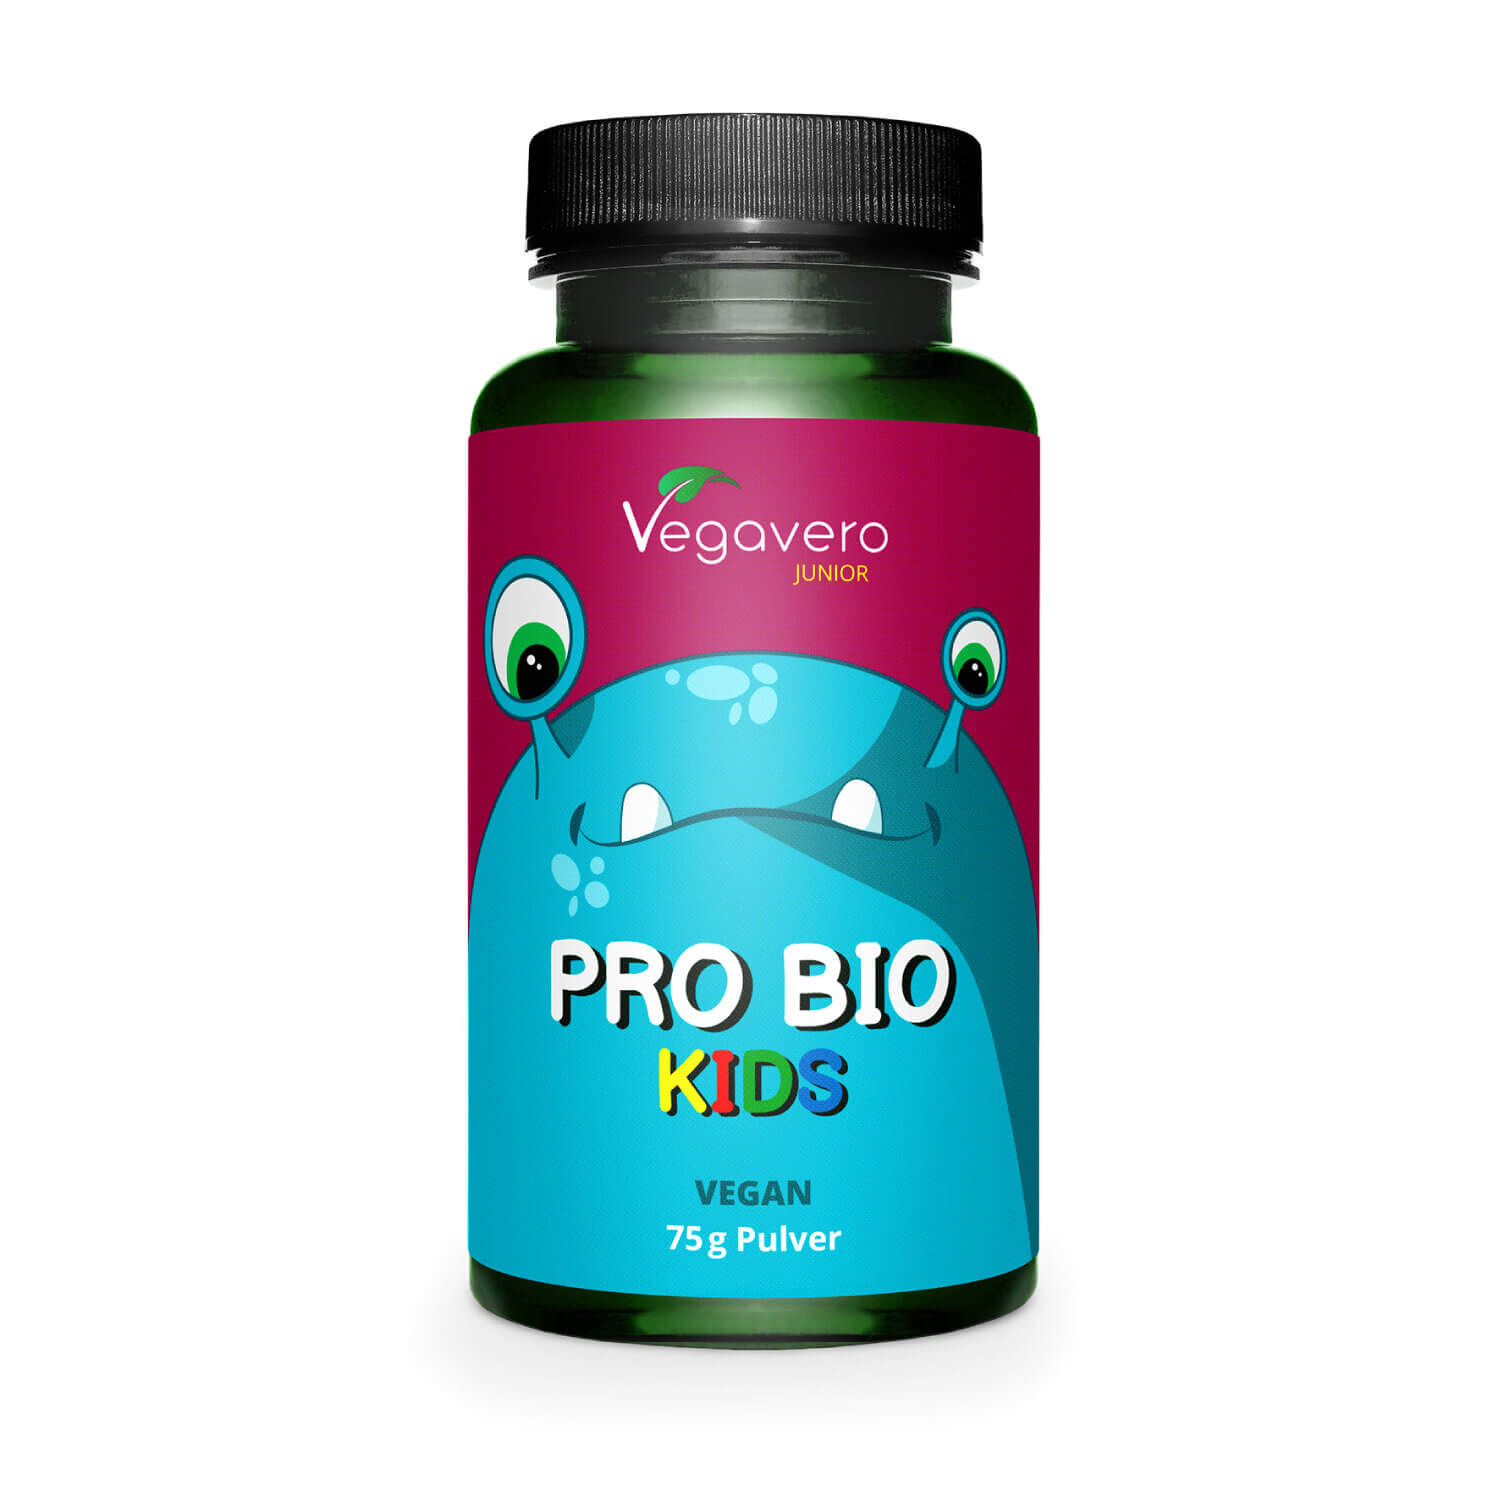 Vegavero Pro Bio Kids | 75g Pulver